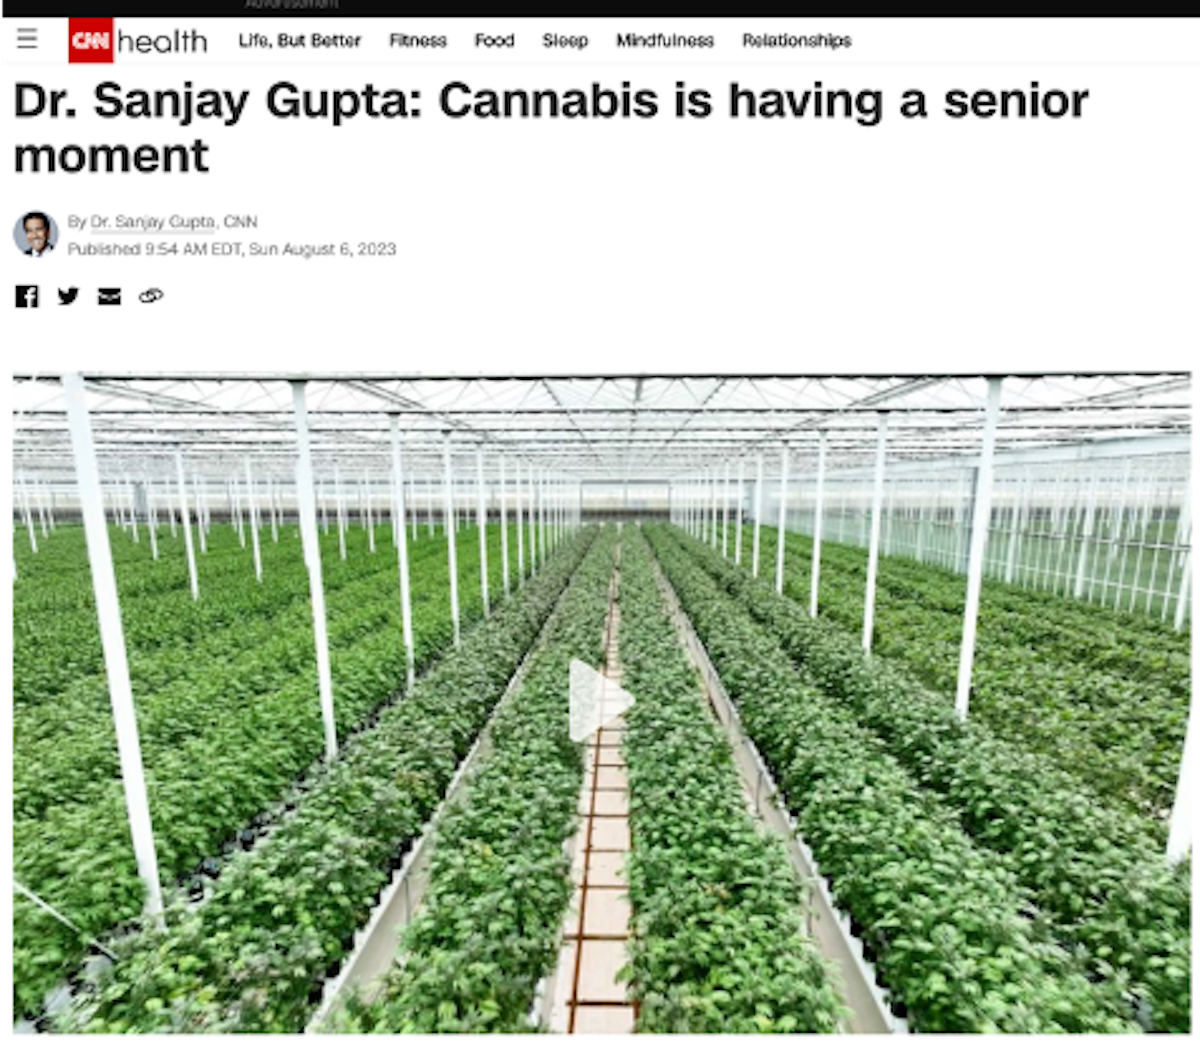 marijuana plantation cnn screenshot